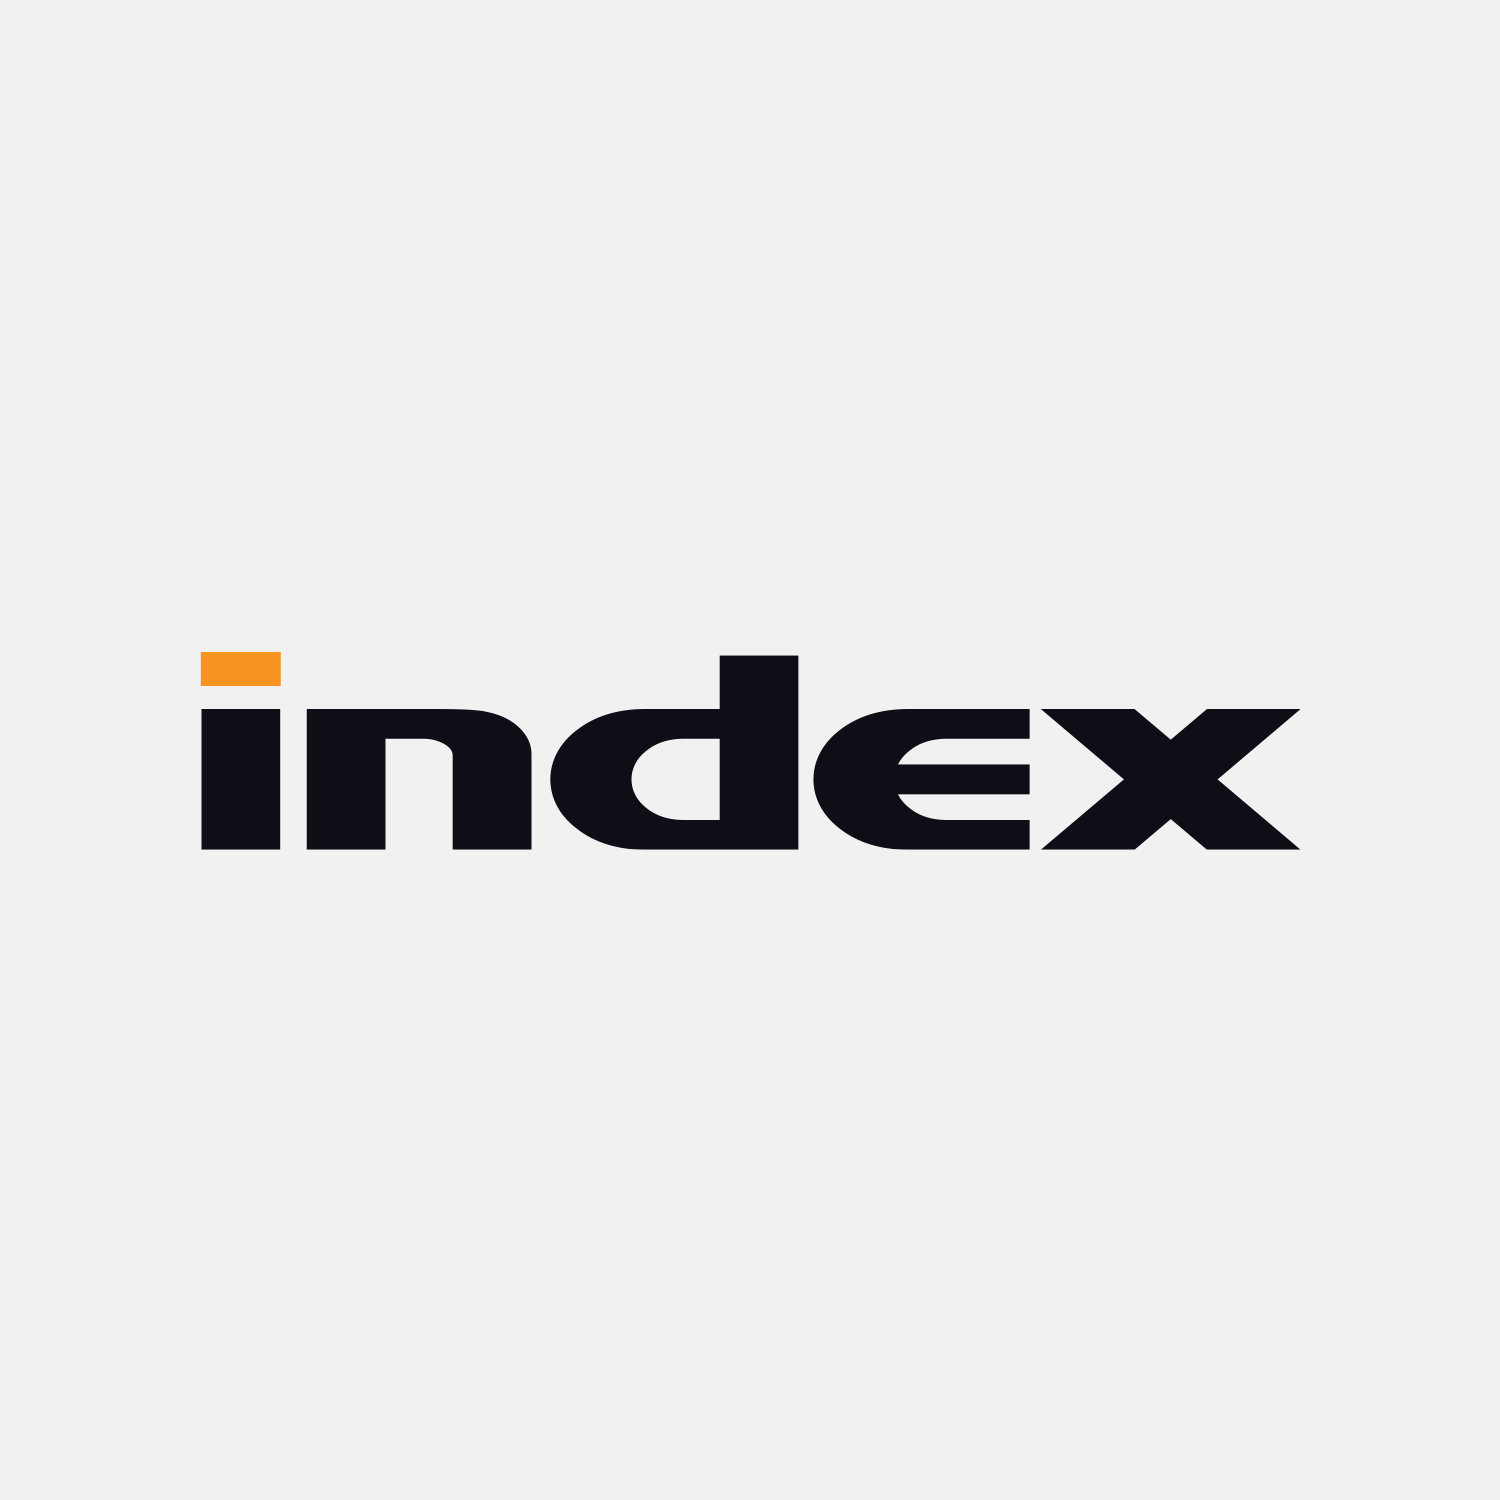 News Portal Index.hu Sold To Foundation Linked To Simicska